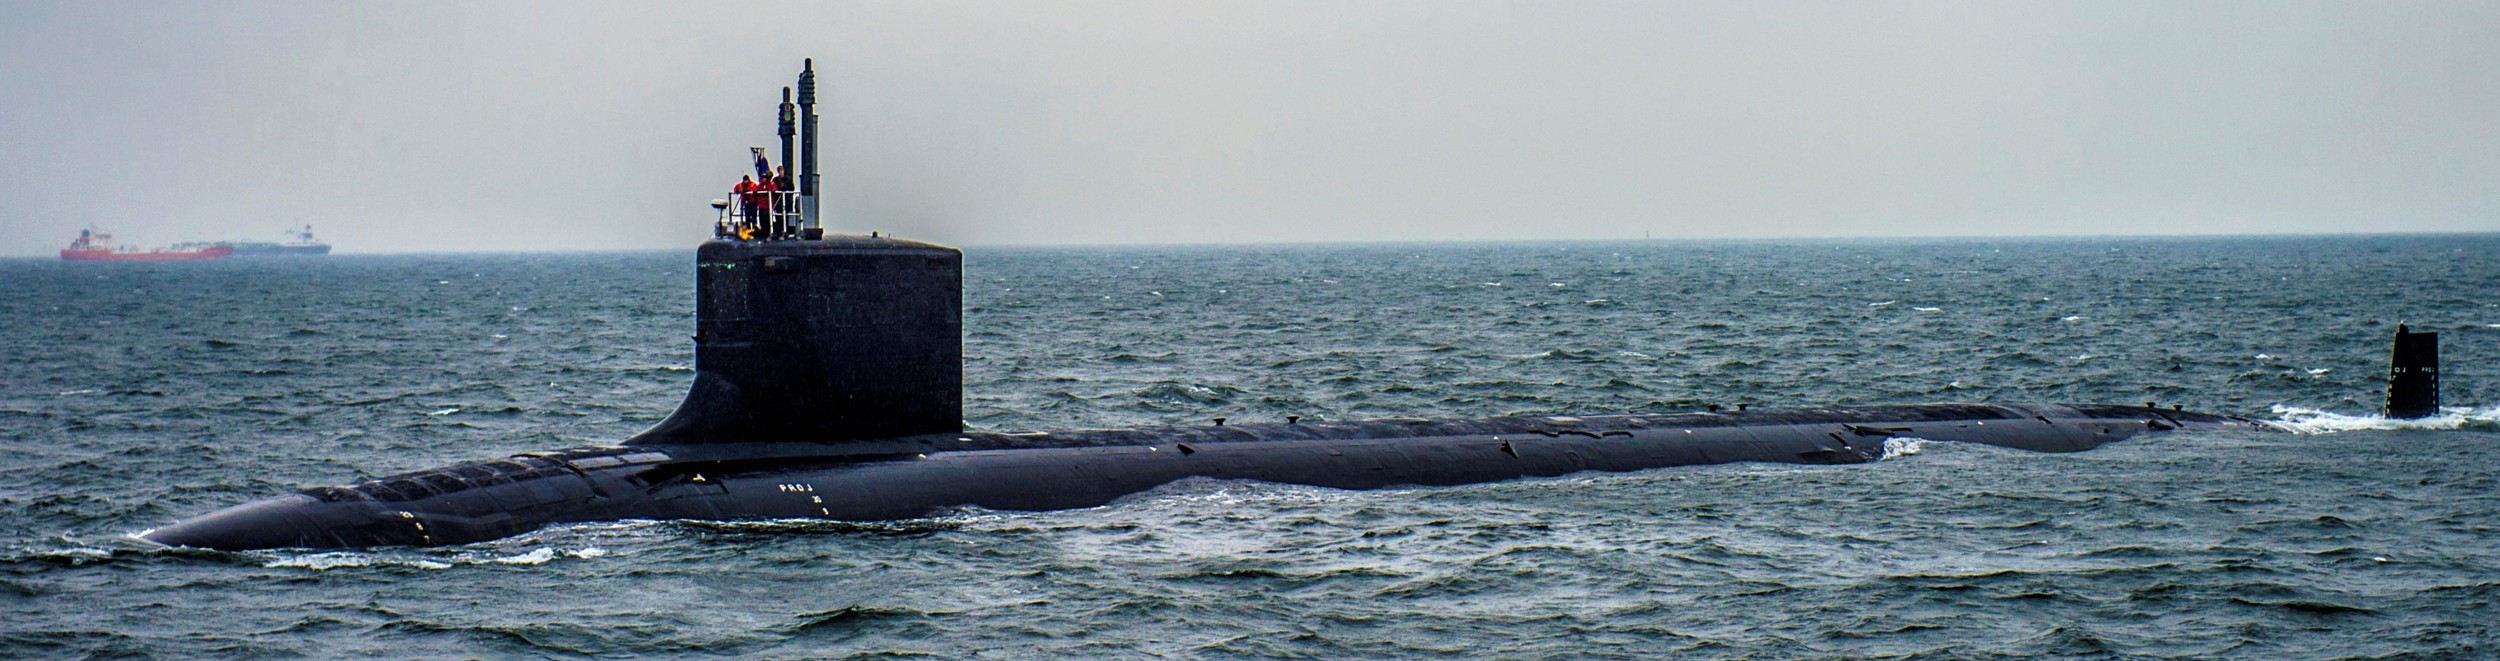 ssn-776 uss hawaii virginia class attack submarine us navy 2015 06